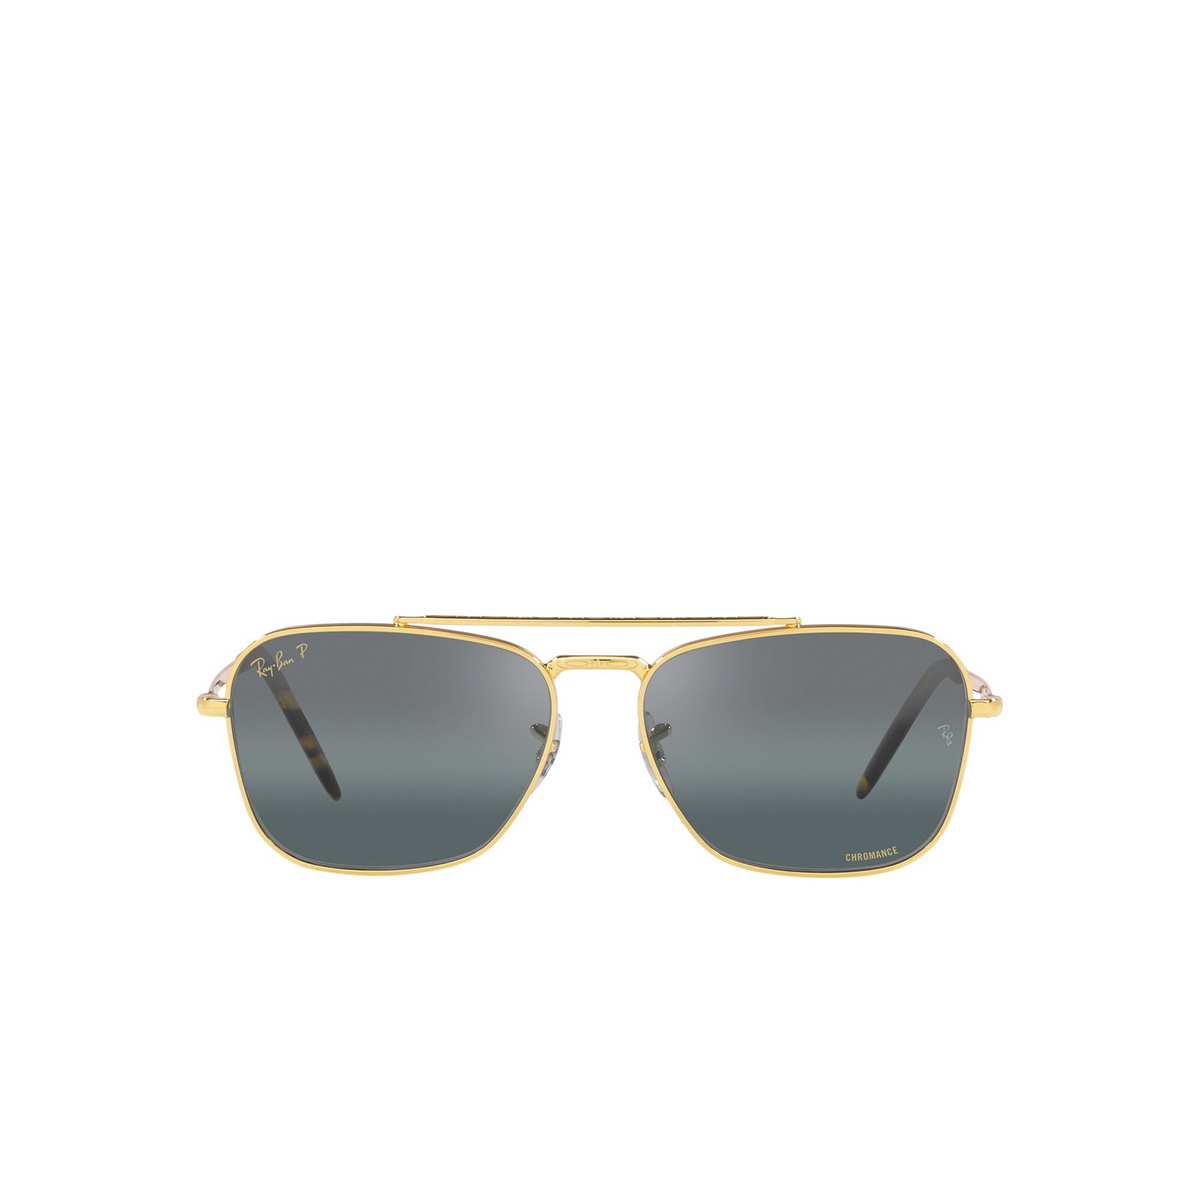 Ray-Ban NEW CARAVAN Sunglasses 9196G6 Legend Gold - front view